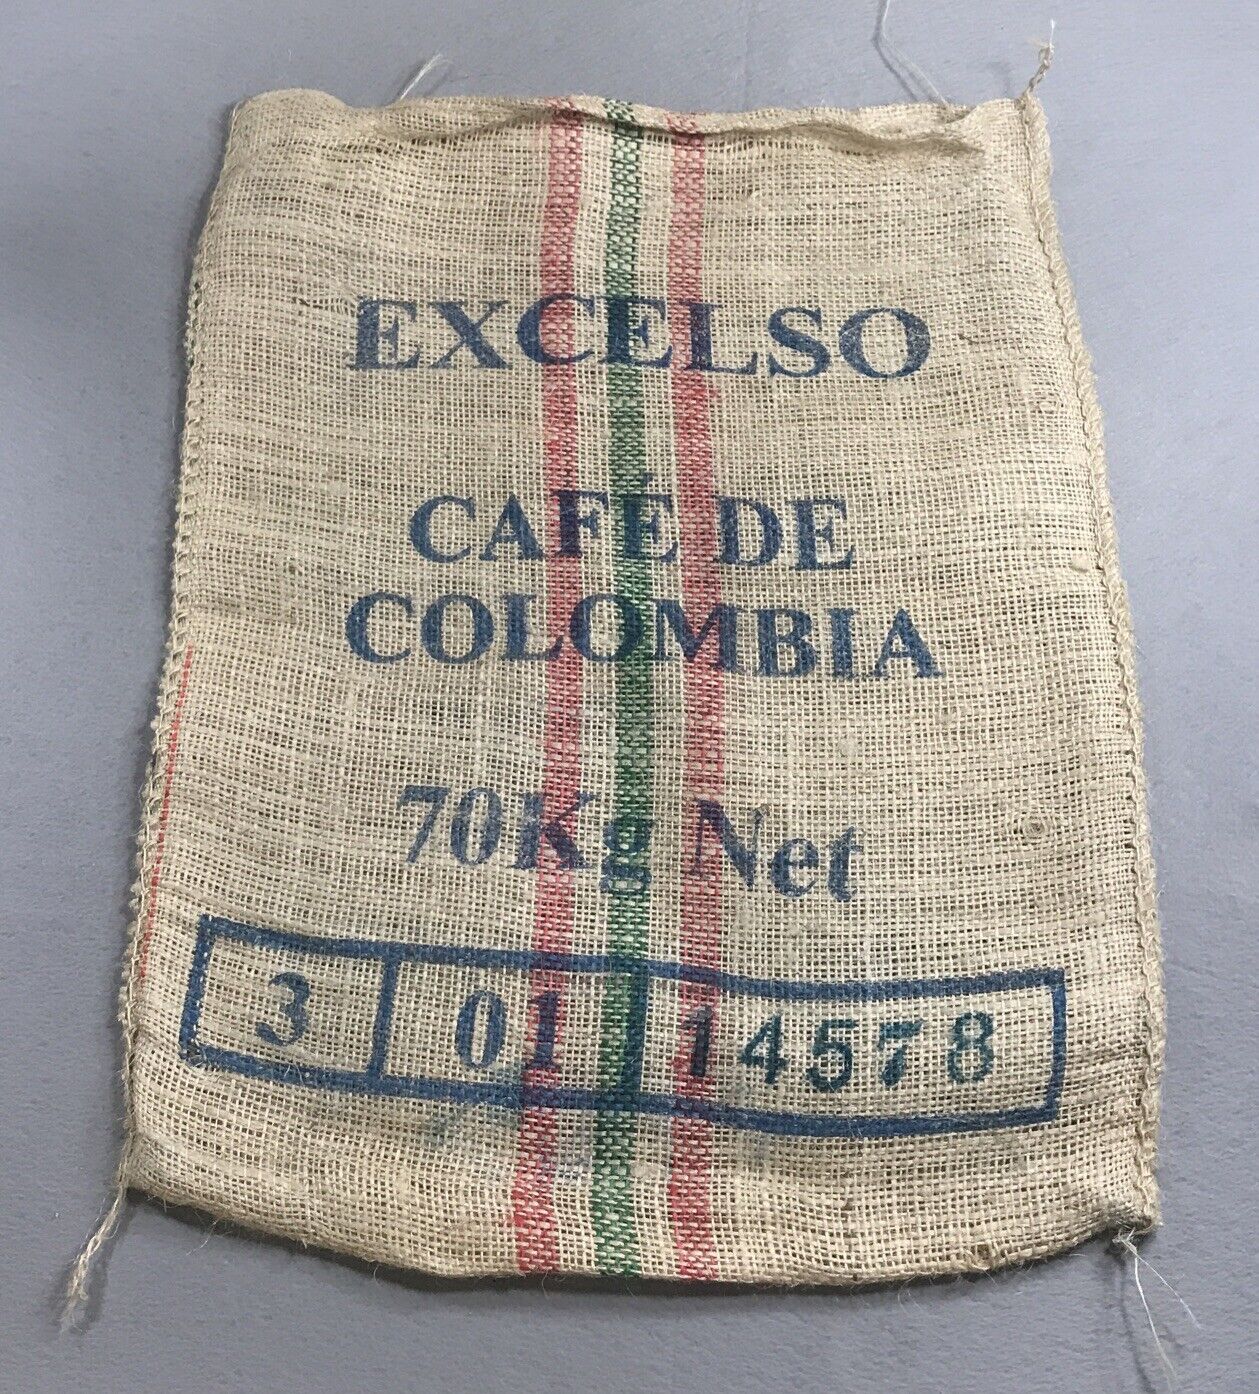 Excelso Café De Colombia Coffee Sack Jute 27x36” Popayán - Colombia Cauca S.A.